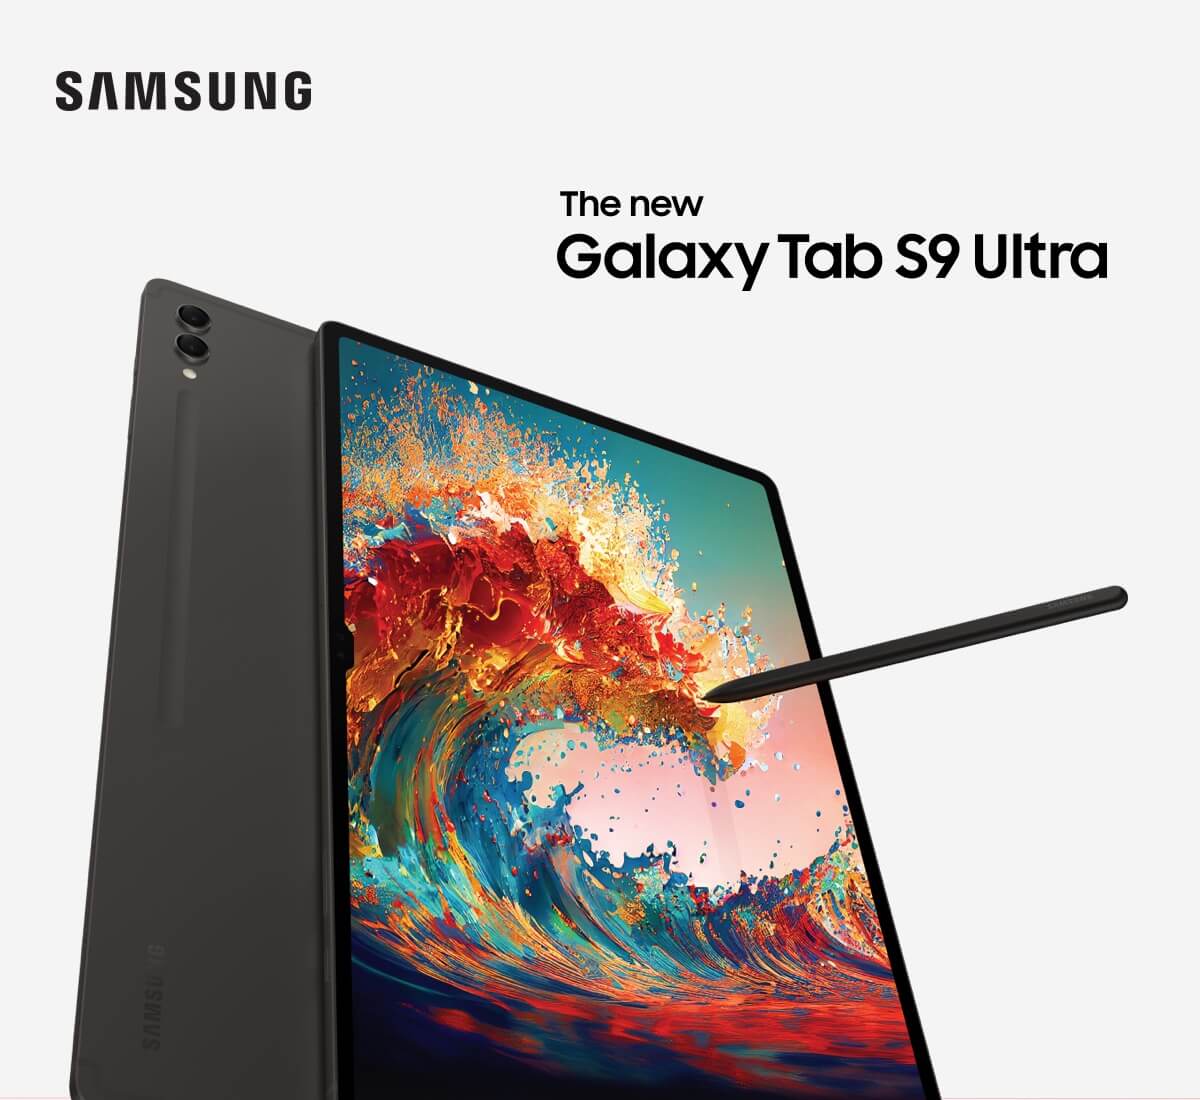 Samsung. The new Galaxy Tab S9 Ultra